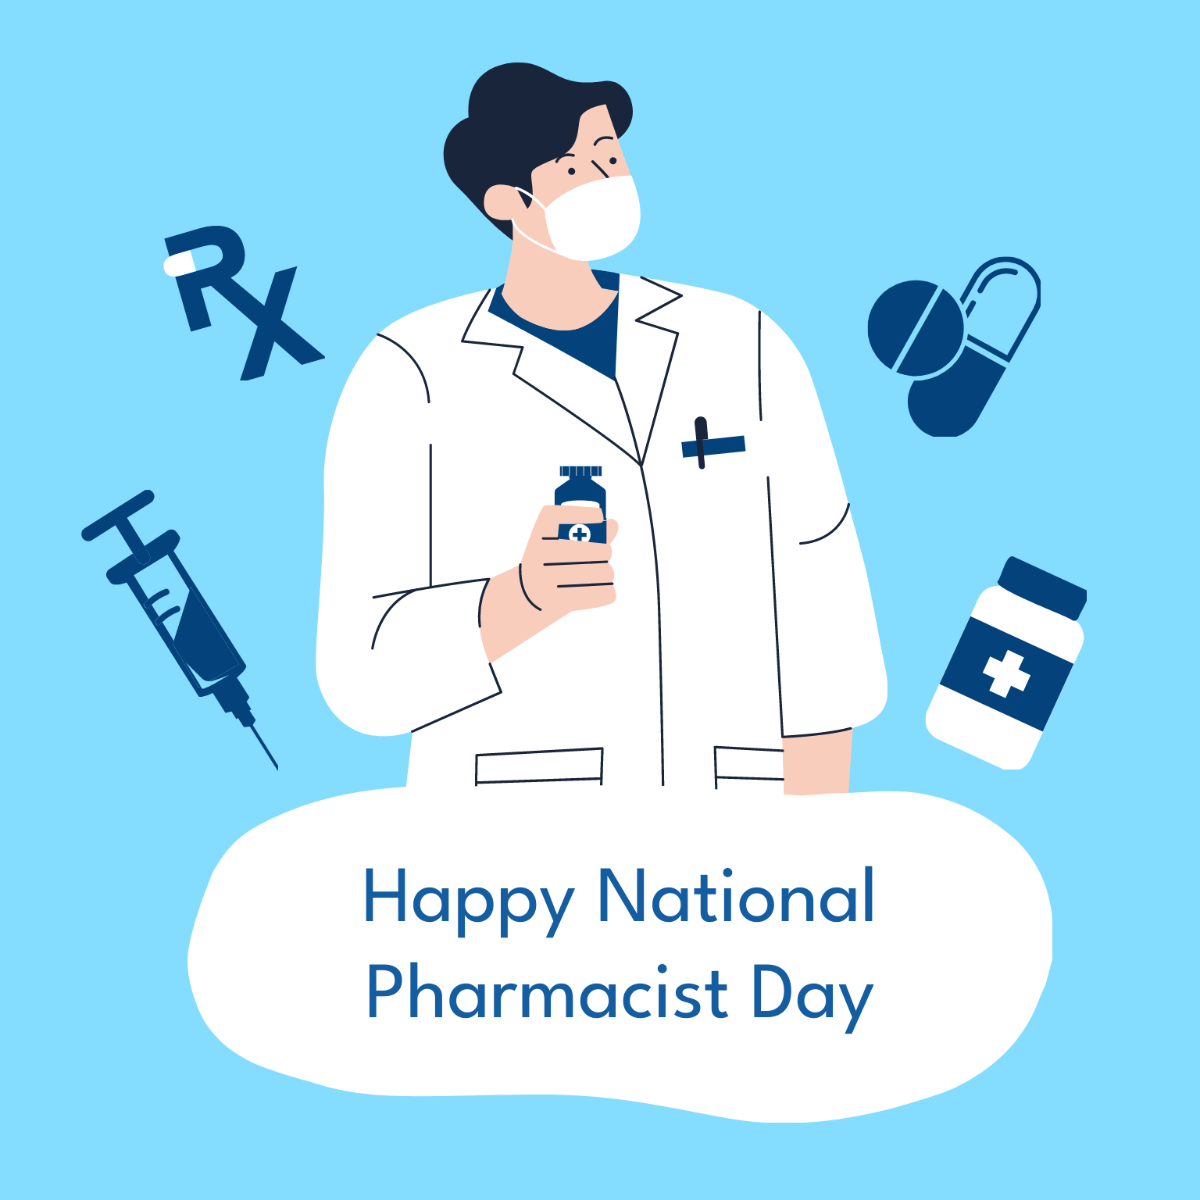 Happy National Pharmacist Day Illustration